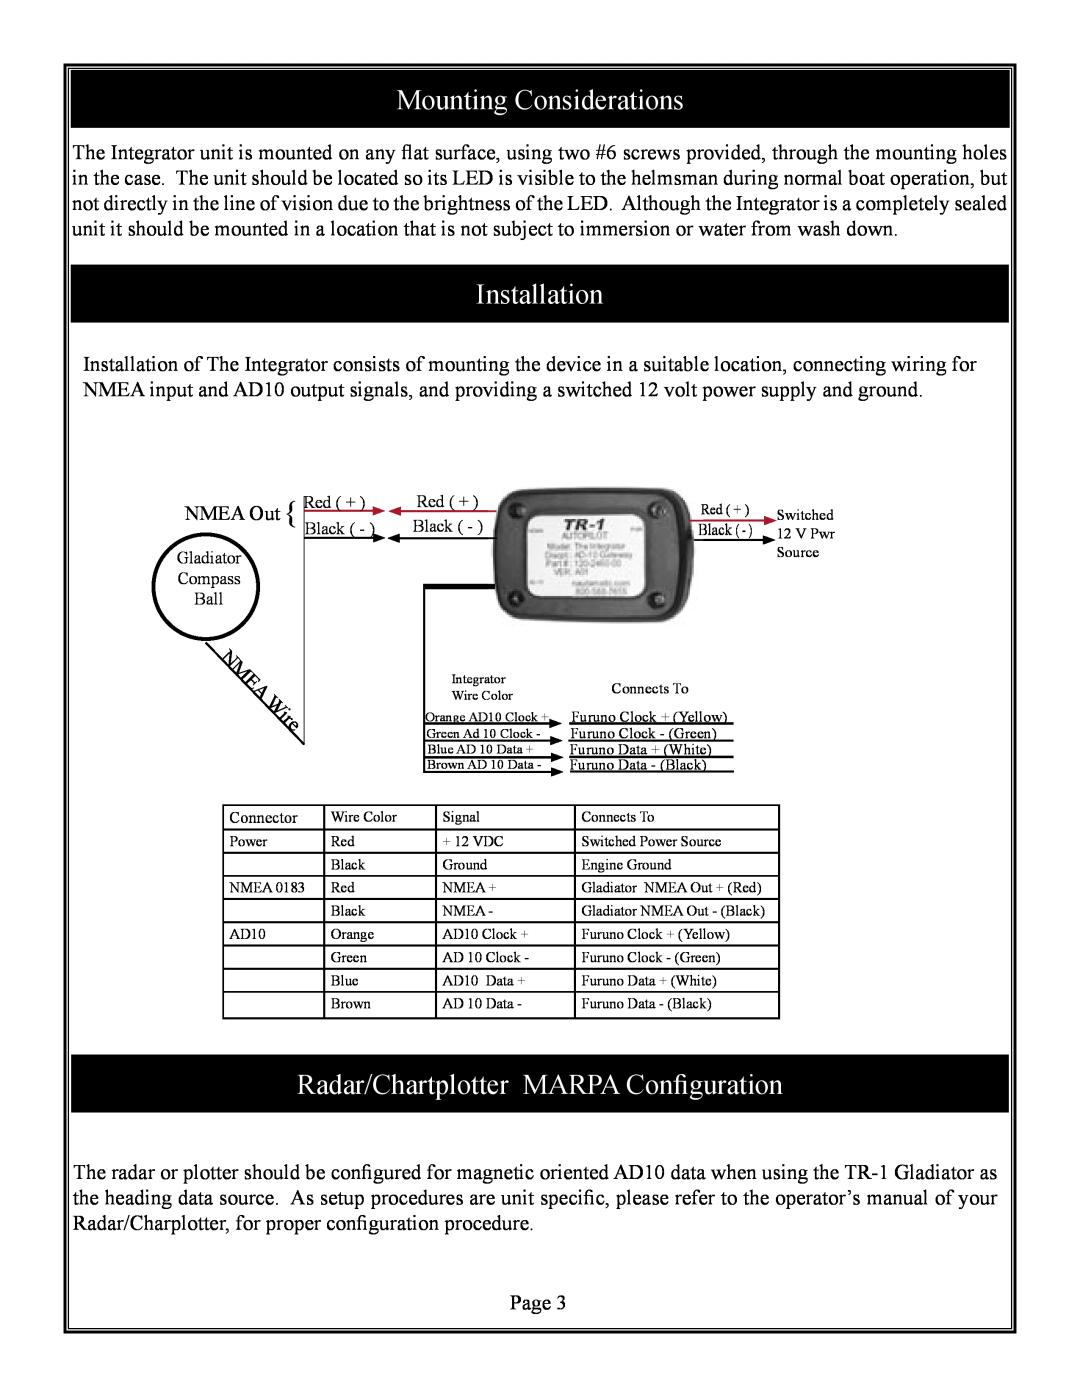 Furuno TR-1 user manual Mounting Considerations, Installation, Radar/Chartplotter MARPA Configuration 